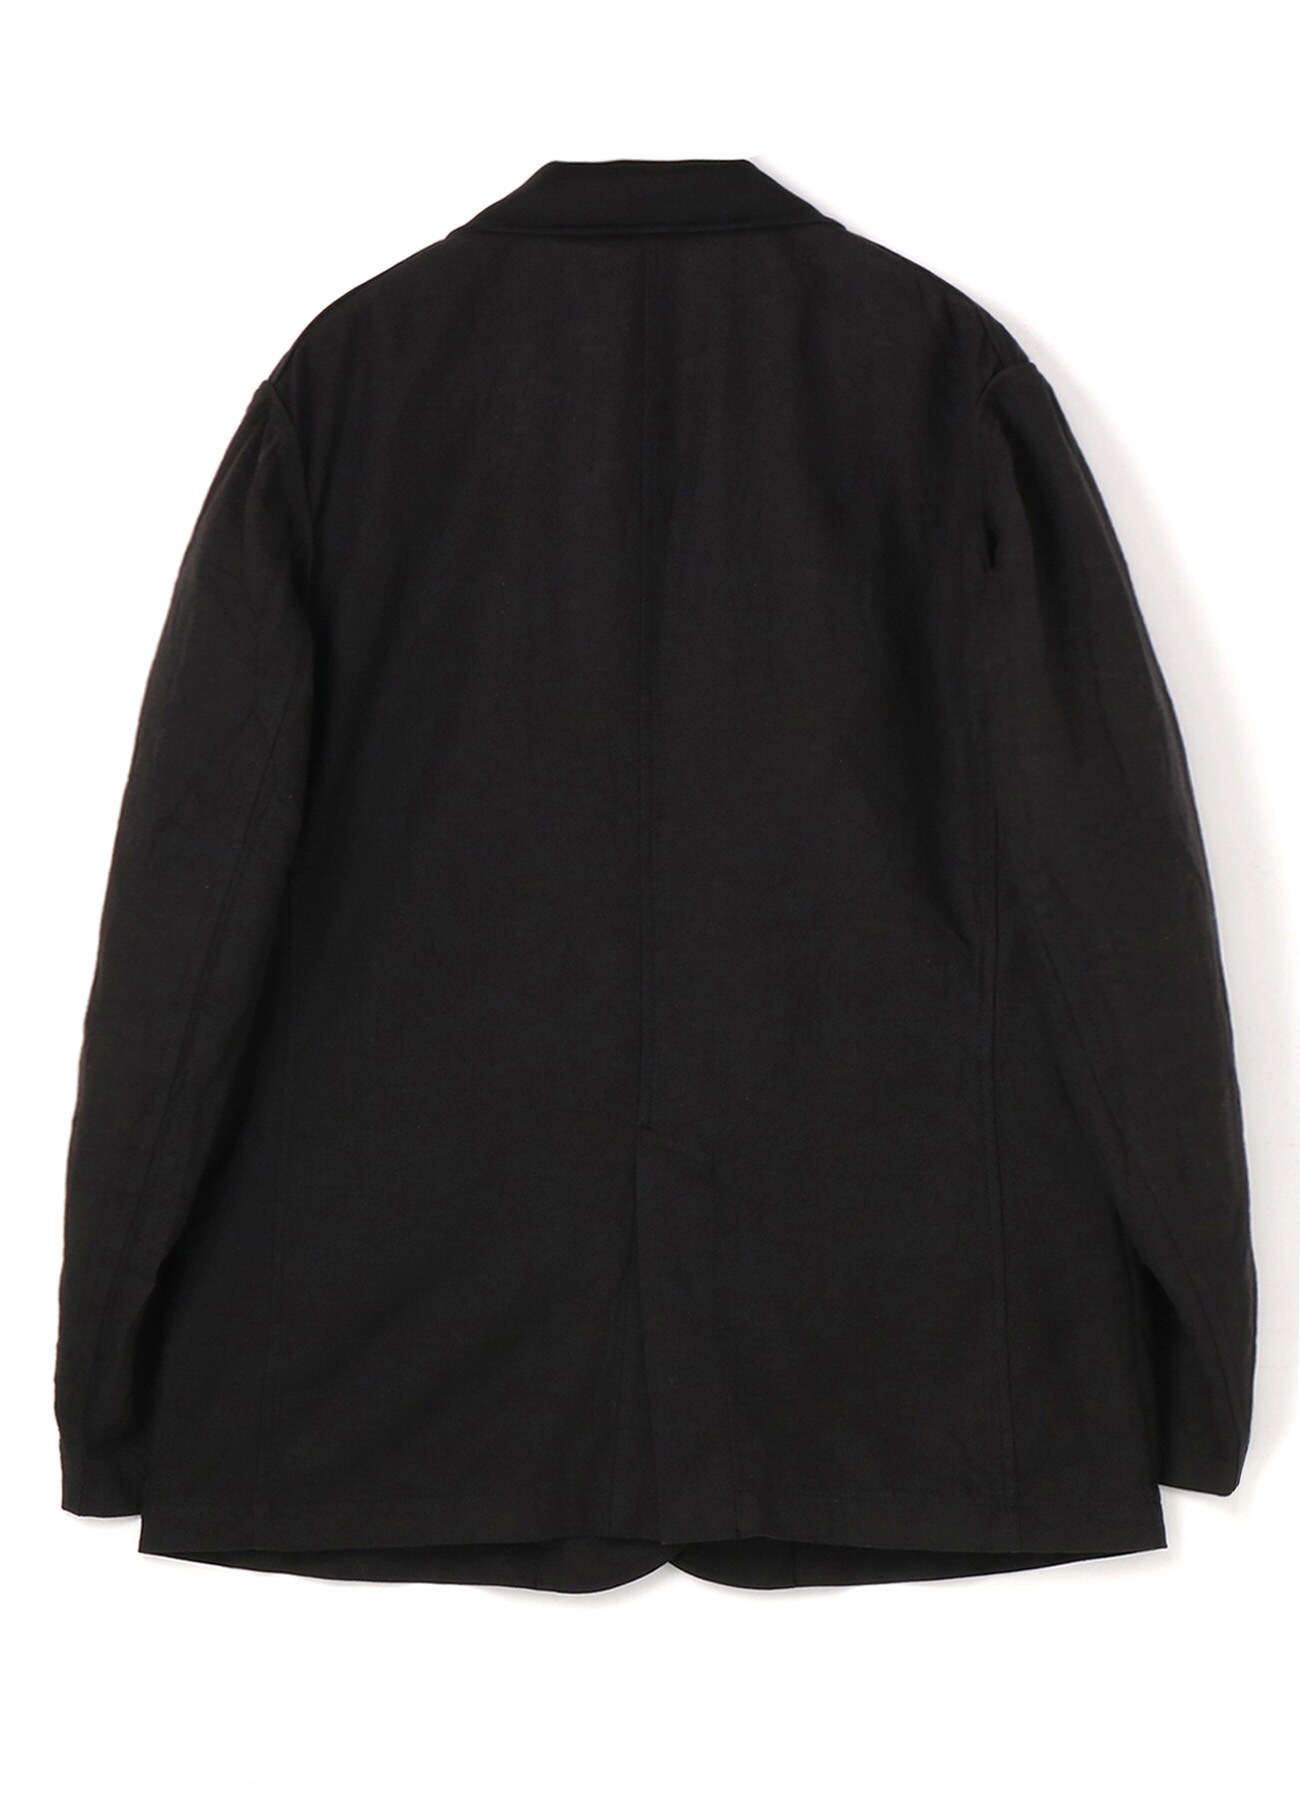 Li/C Herringbone Washer Twill Inside Out Reversible 2BS Jacket